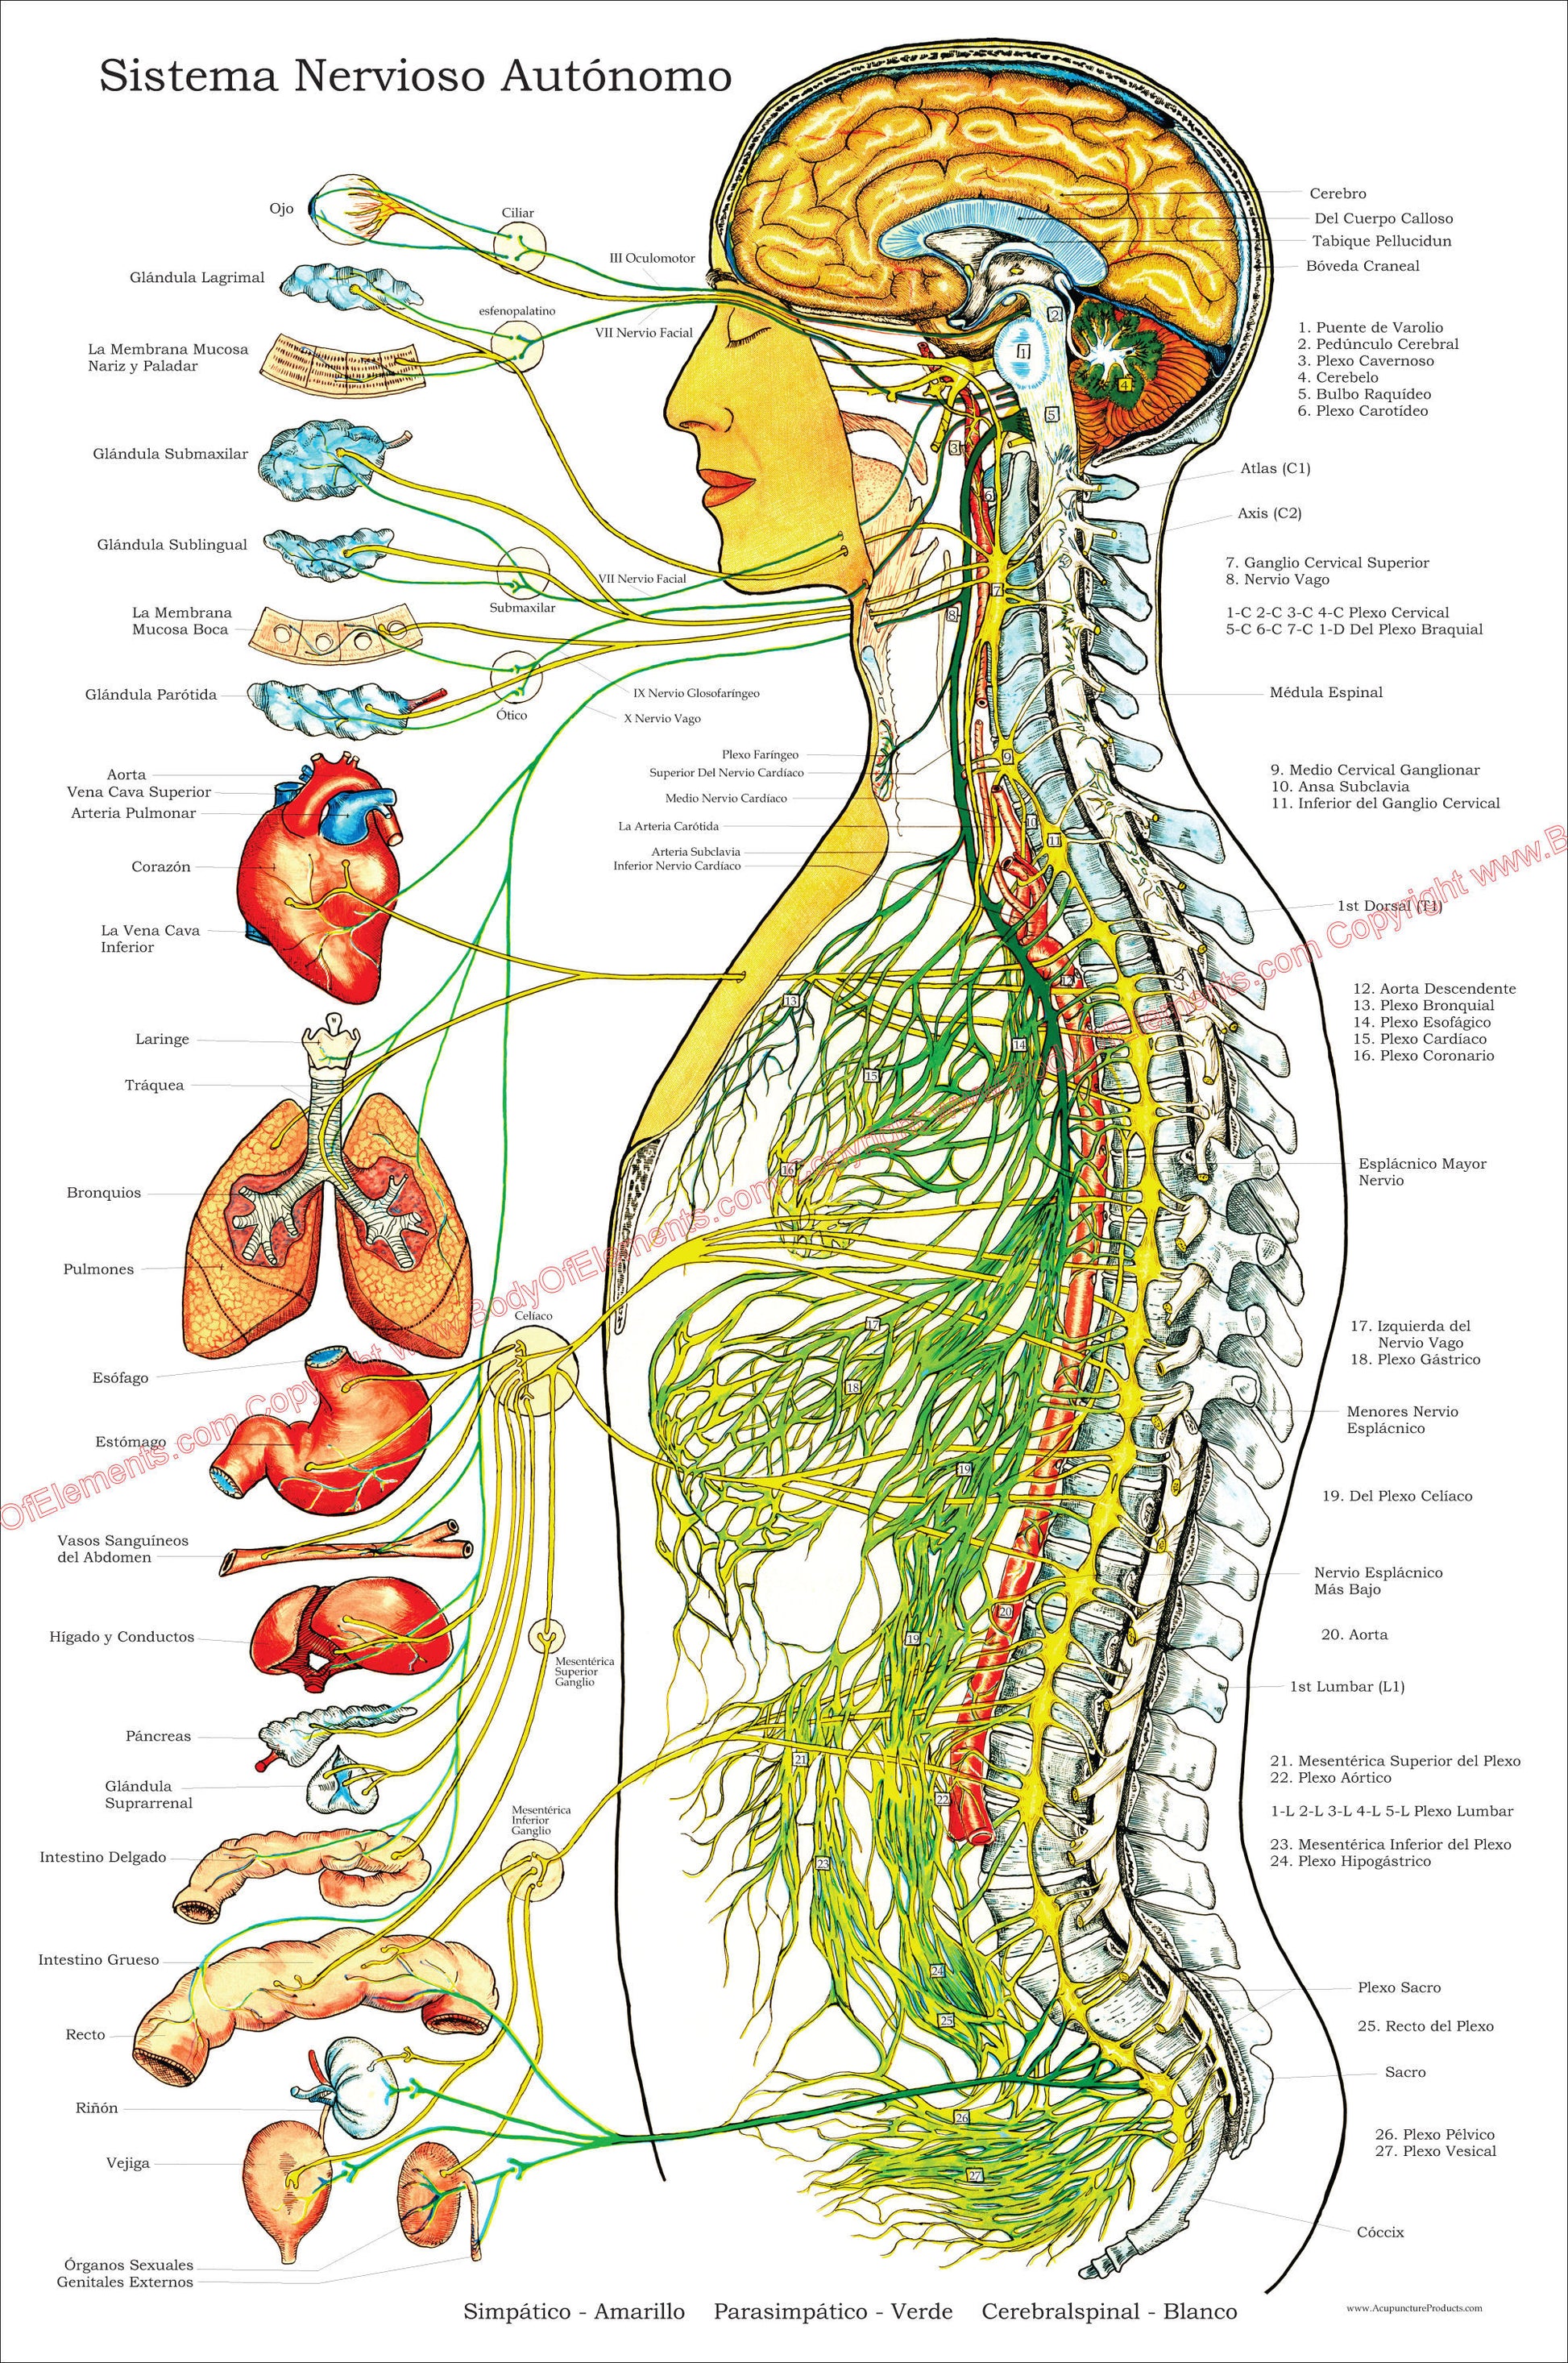 Autonomic nervous system chart in Spanish